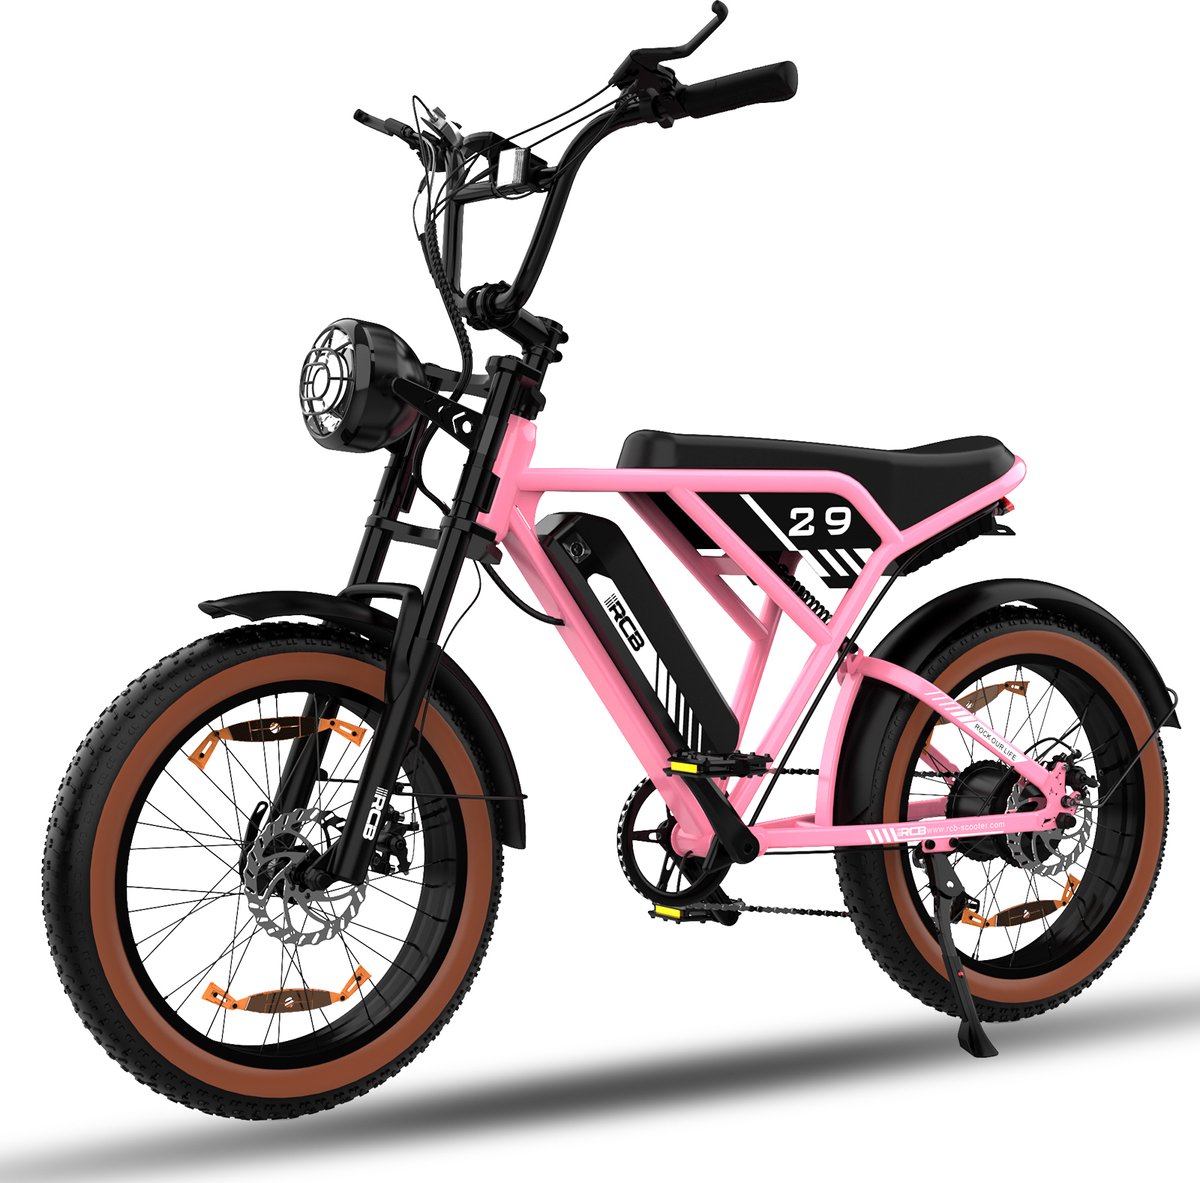 RCB Elektrische Fatbike | Electric Off-Road Bike | E-bike | 250W Motor | 20 Inch | Roze